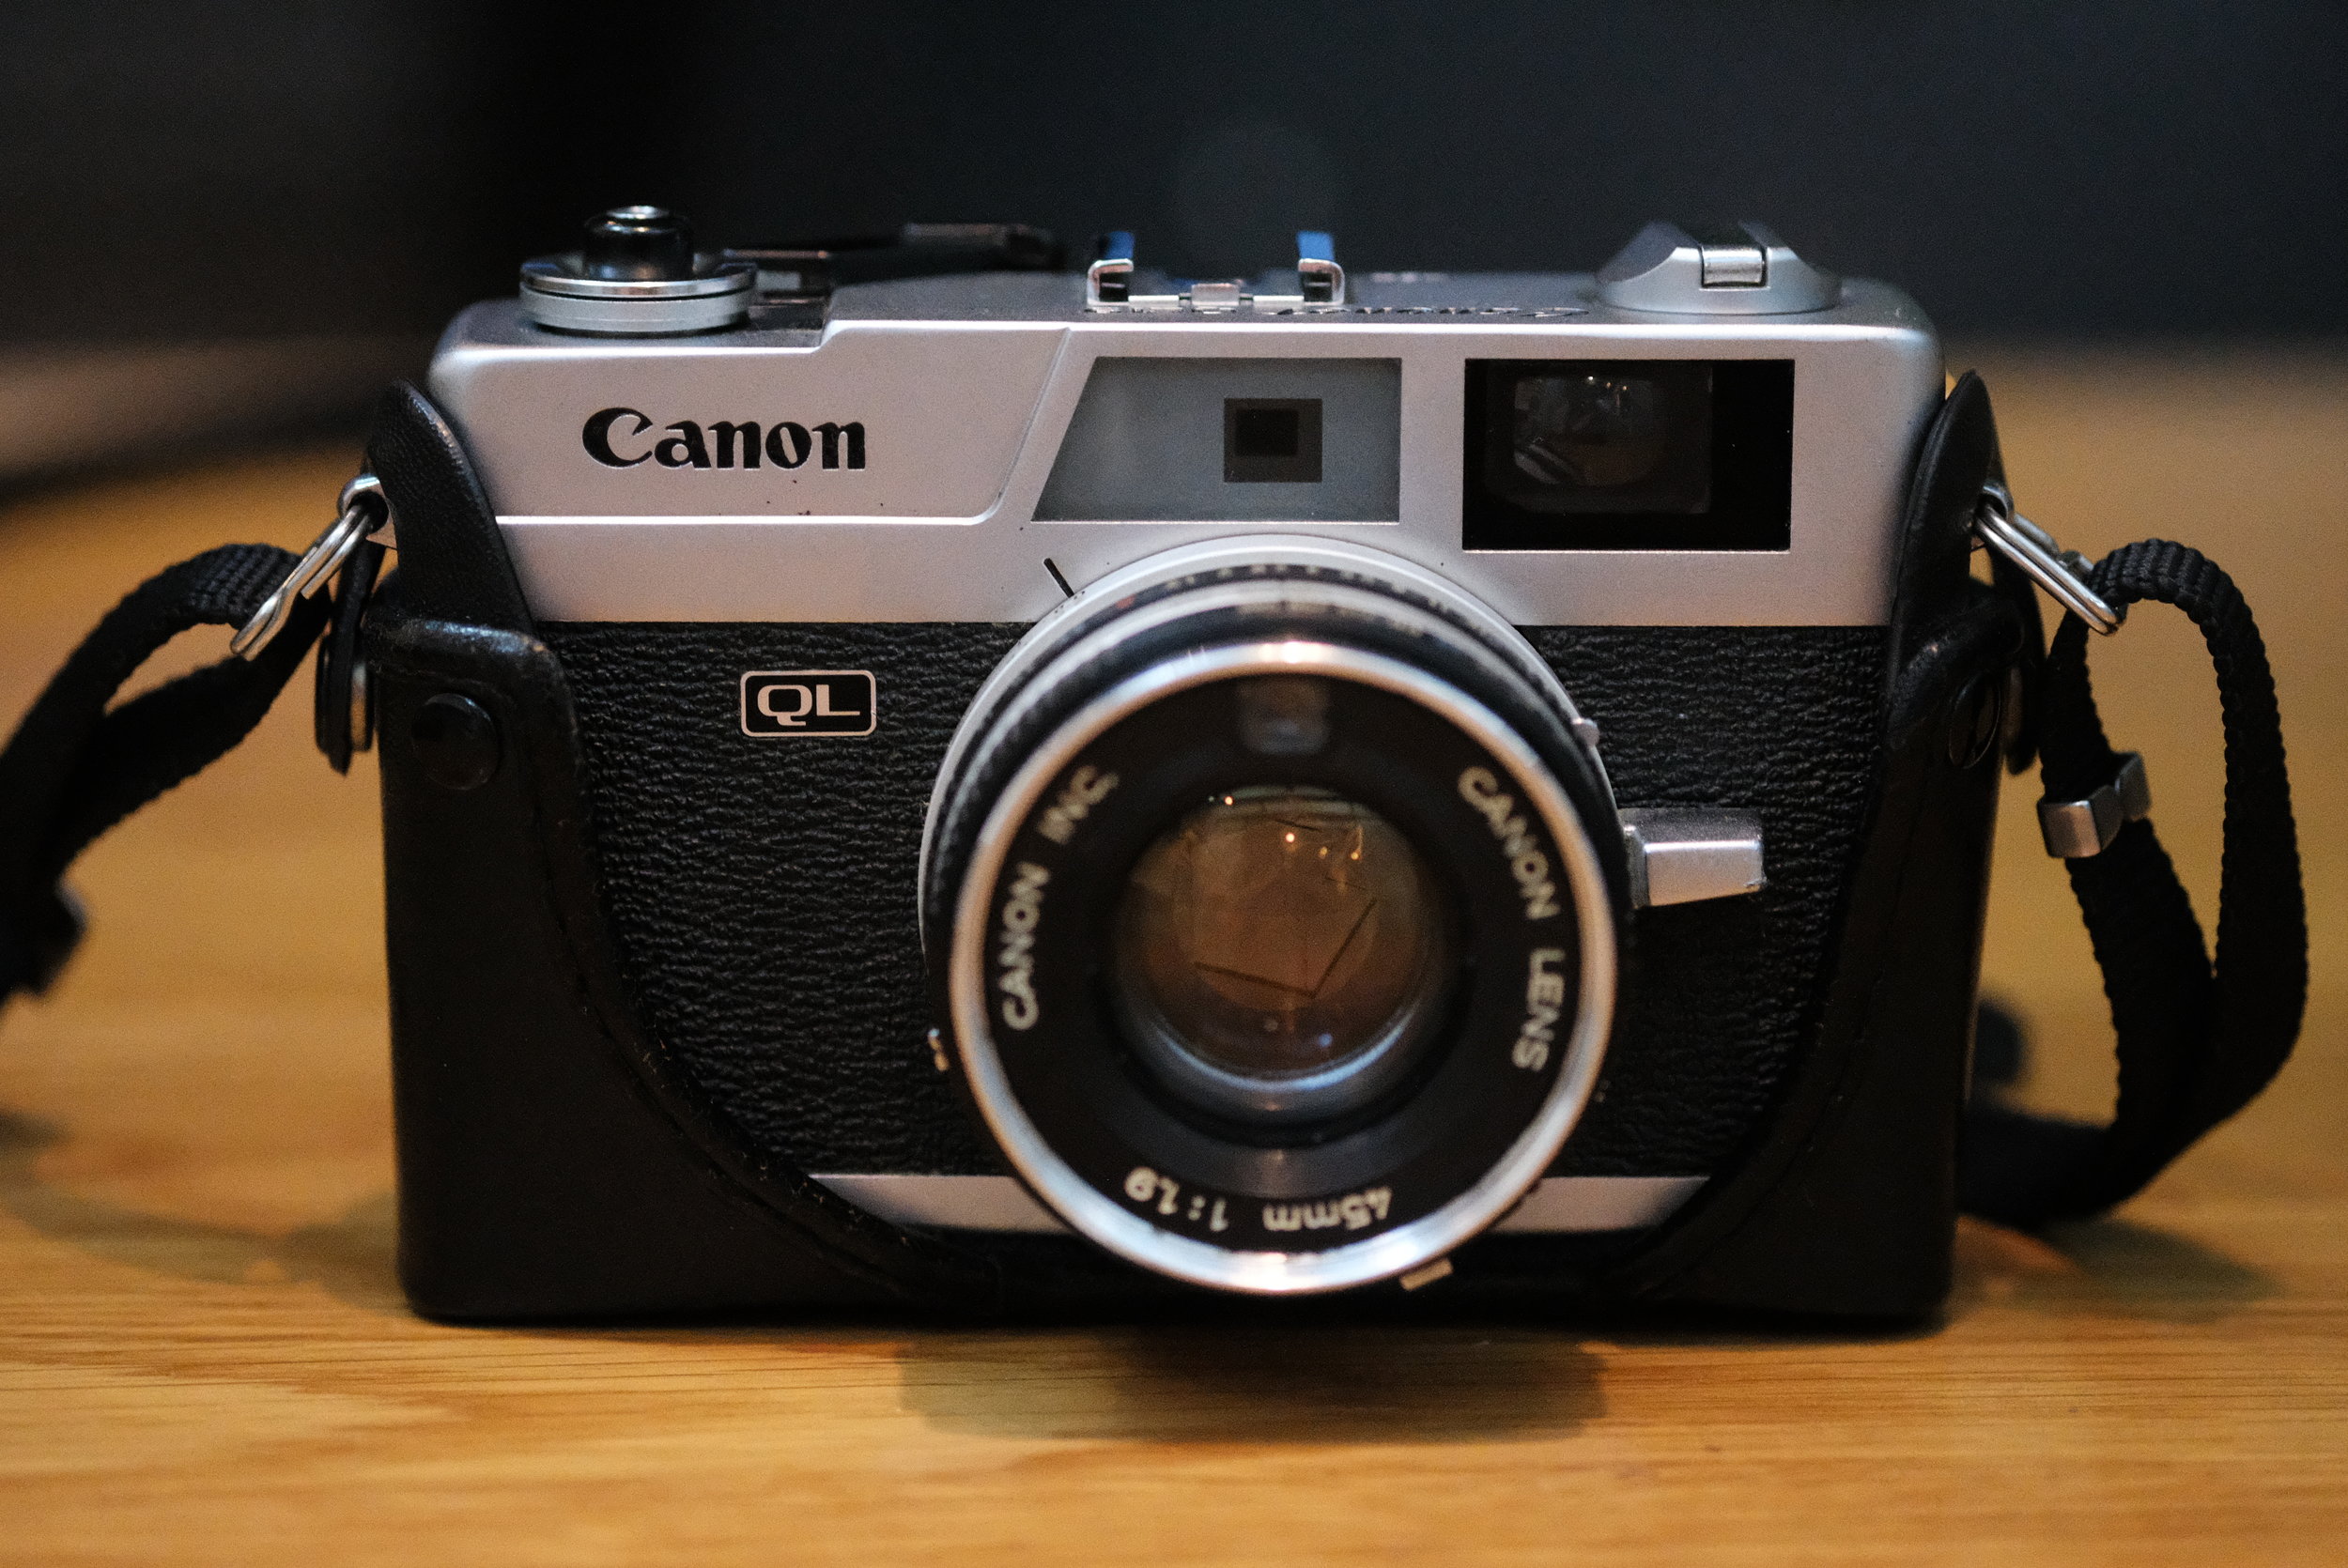 Canon canonet QL19